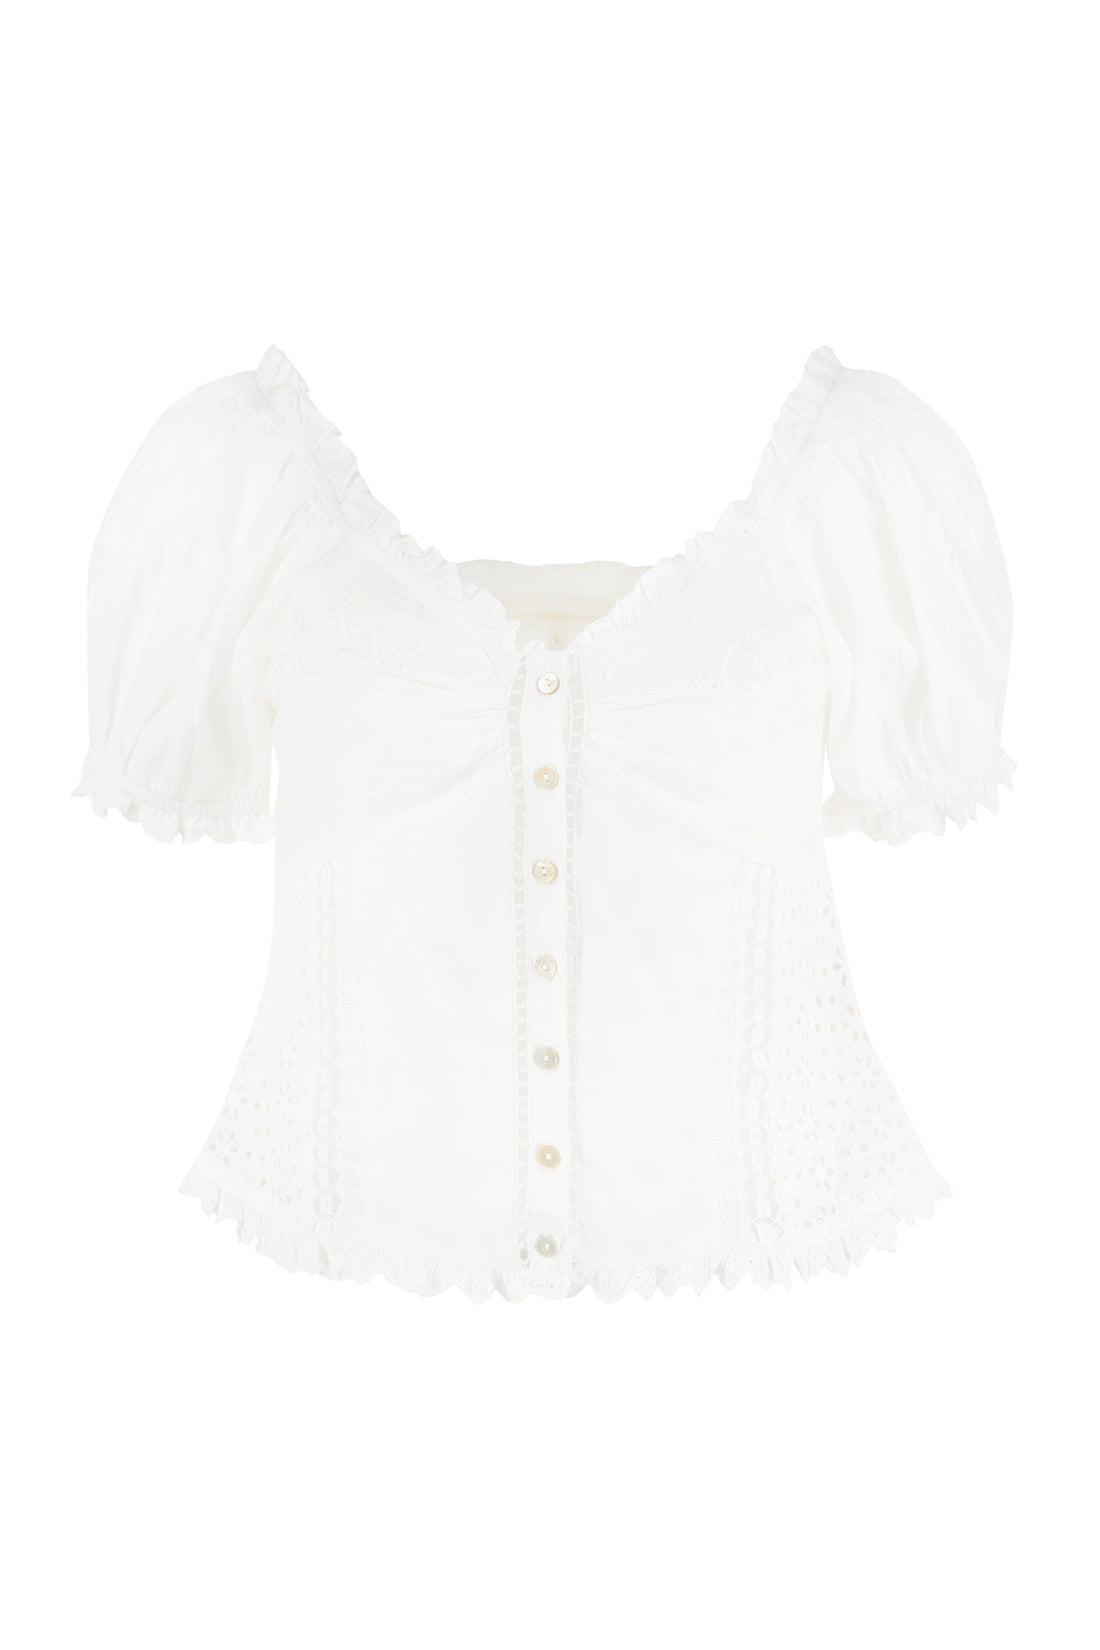 LoveShackFancy-OUTLET-SALE-Bryant cotton and lace blouse-ARCHIVIST